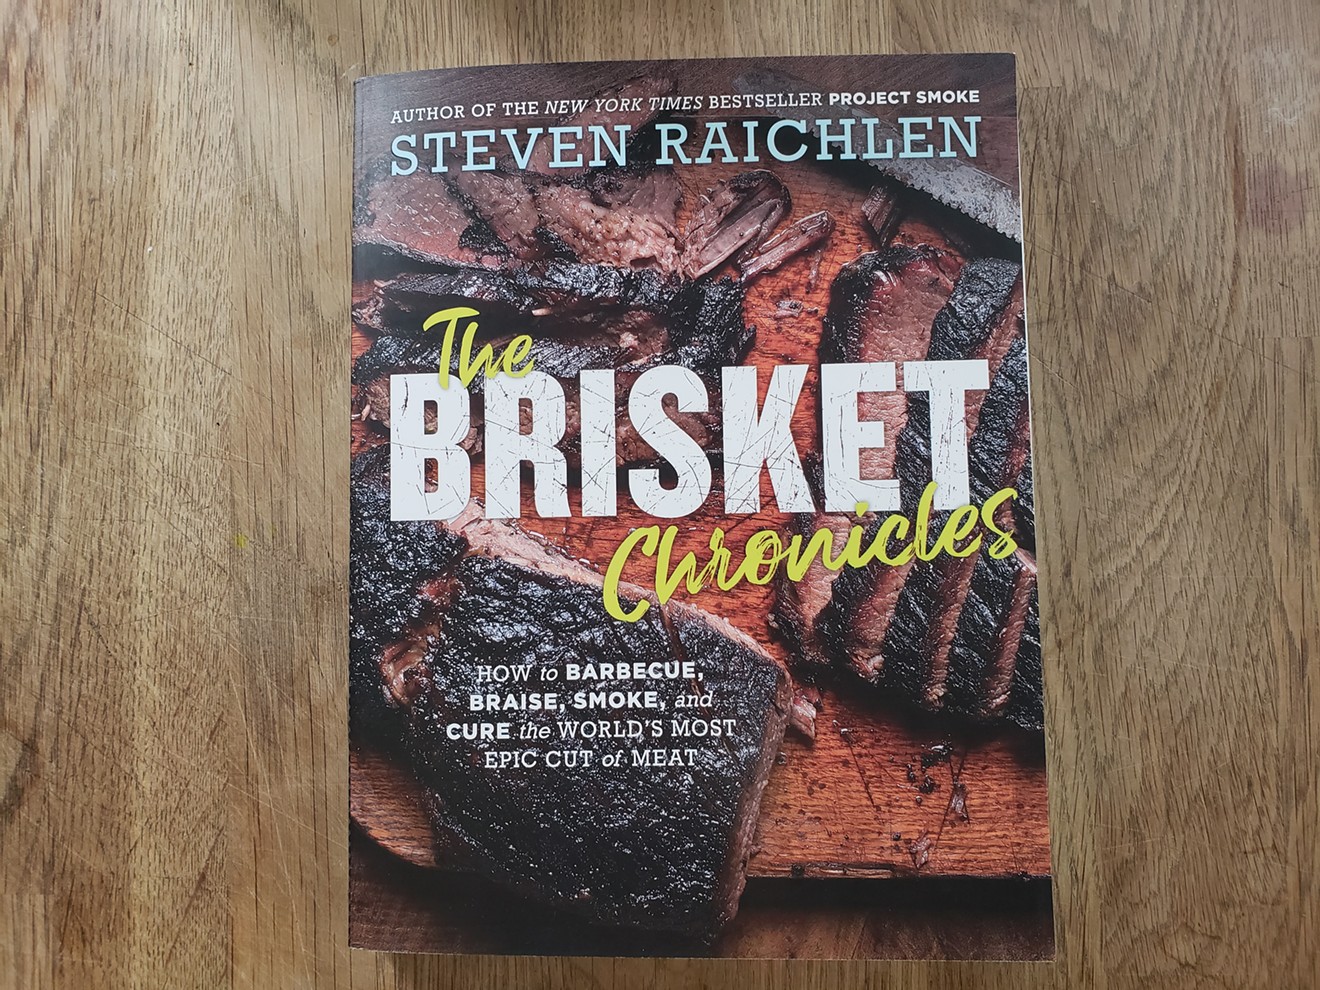 The Brisket Chronicles, a new book by Steven Raichlen.